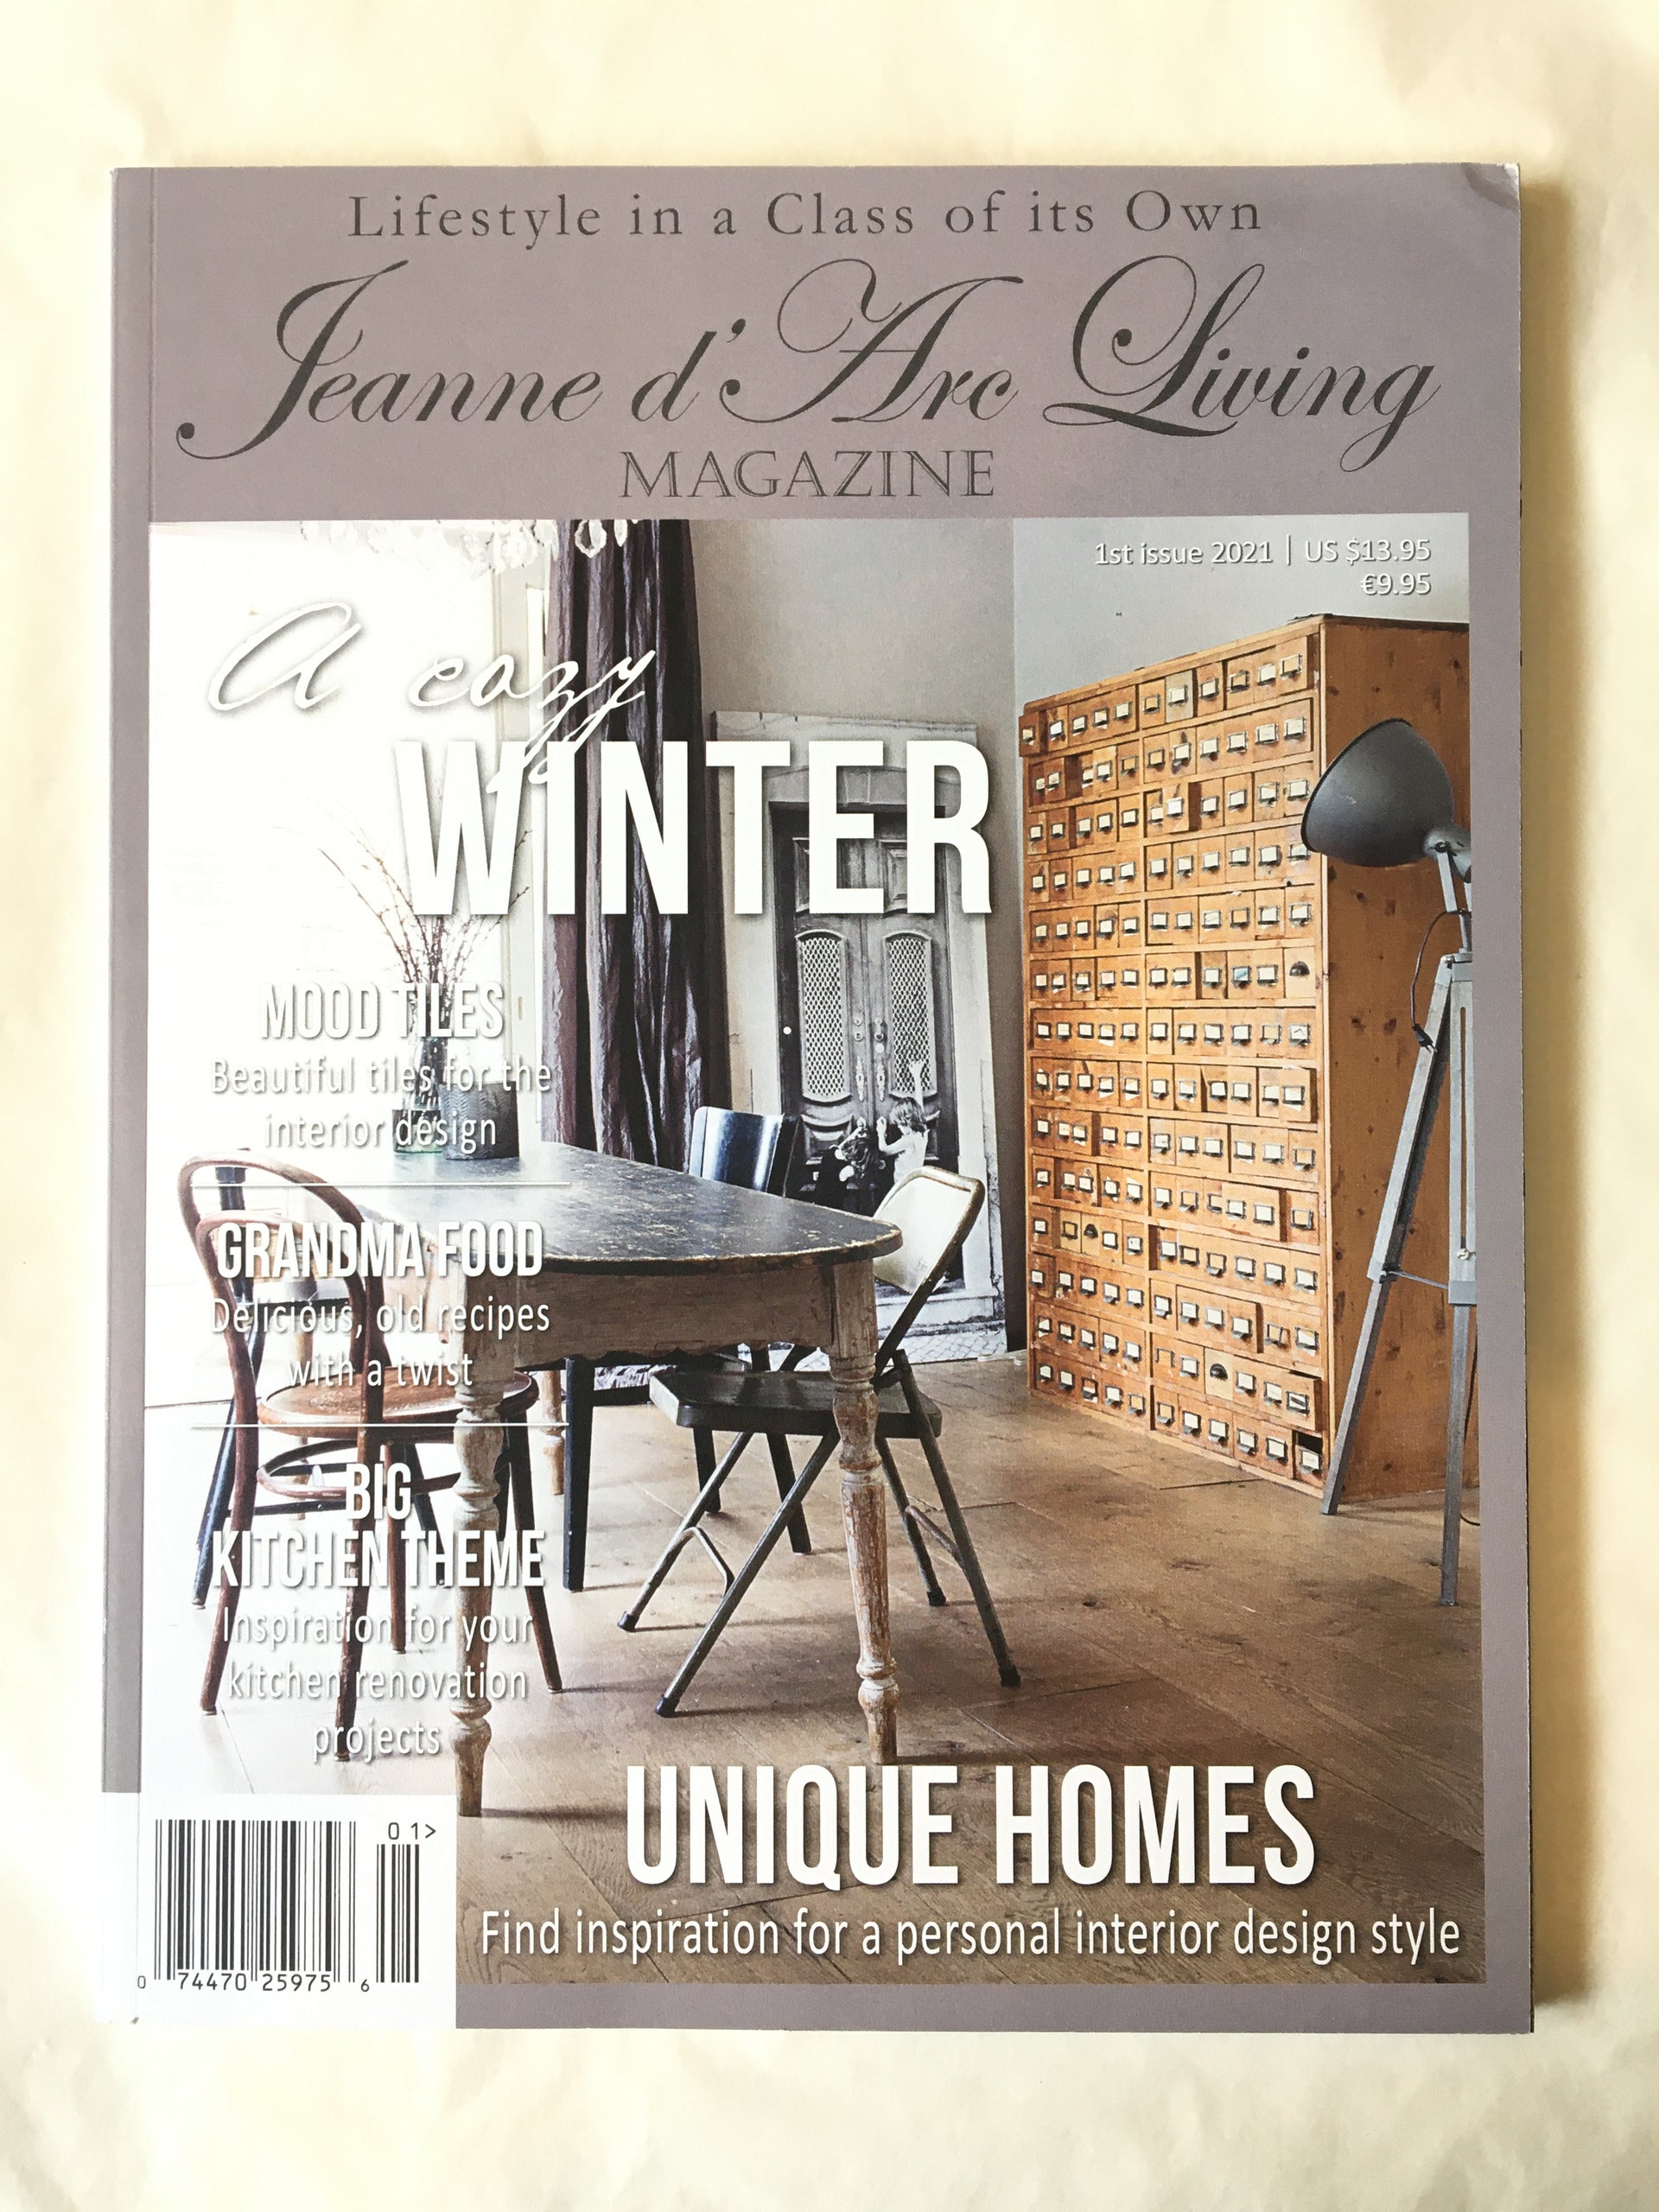 Jean d'Arc Living Magazine - Winter